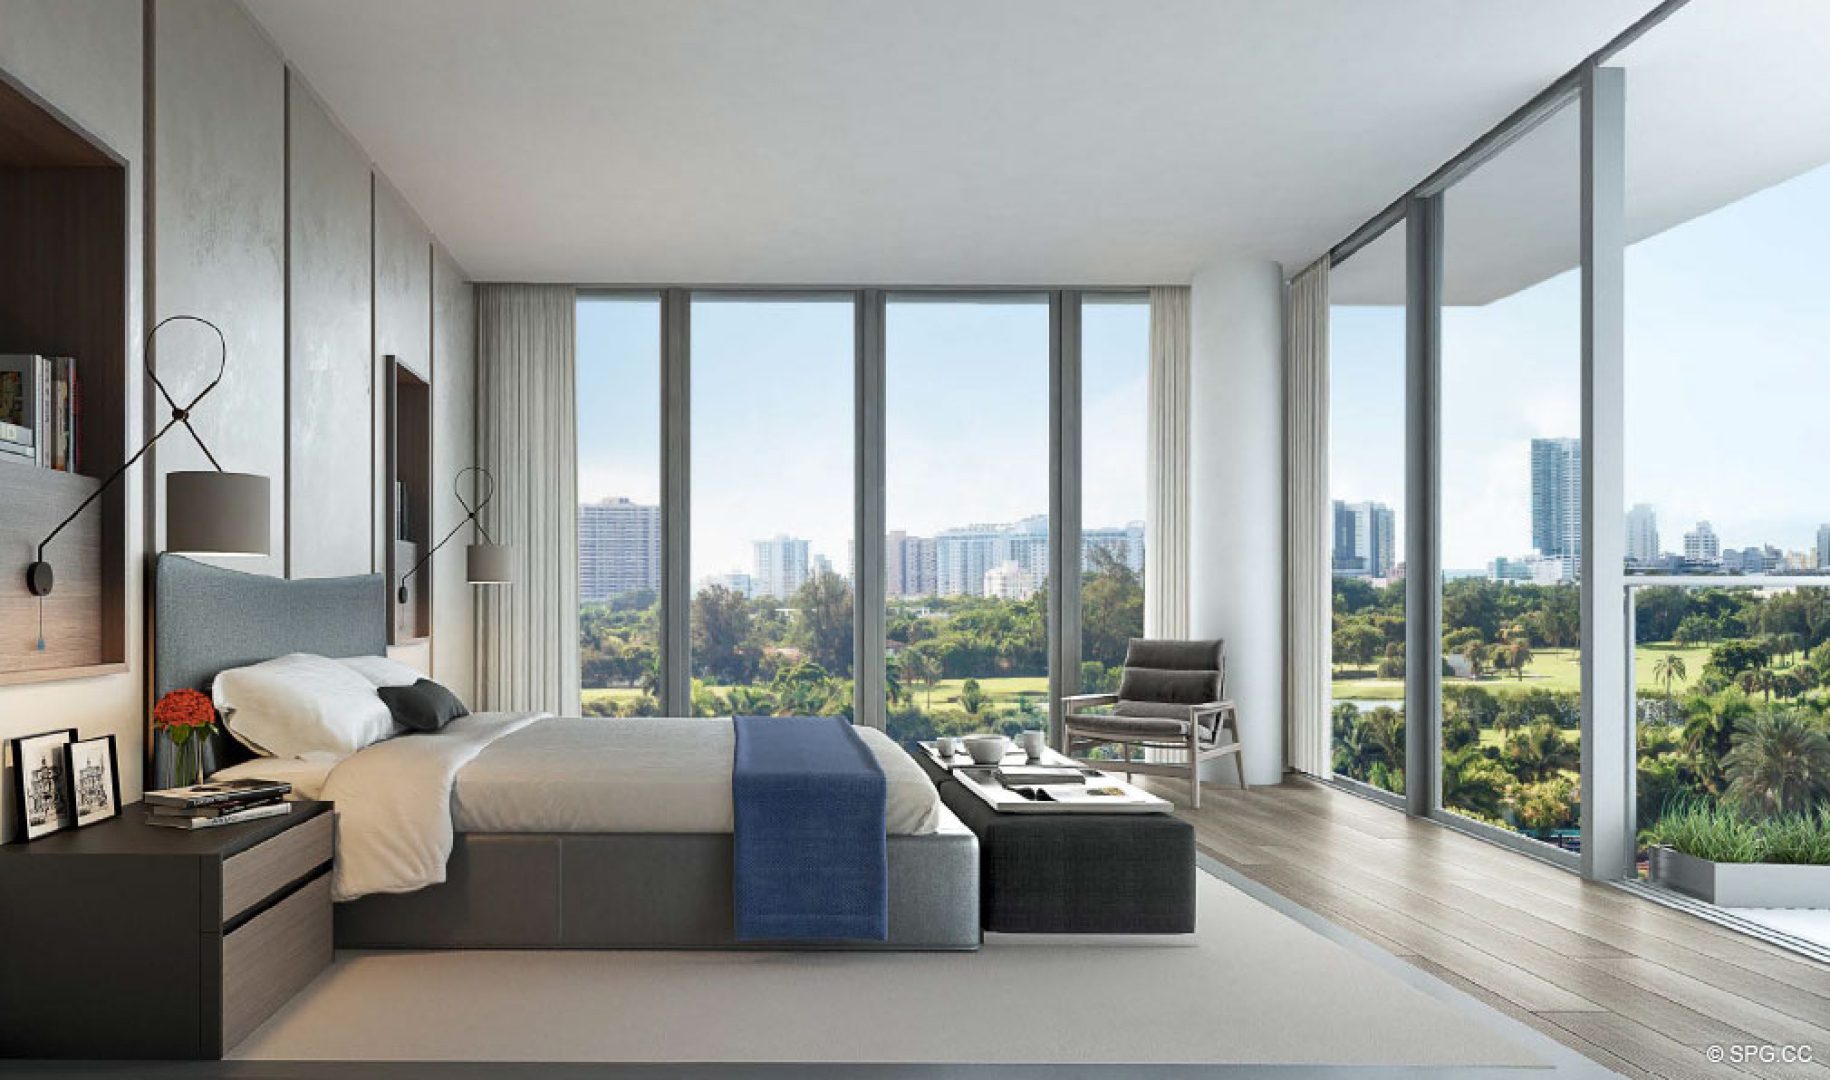 Exceptional Master Suite Views at 3900 Alton, Luxury Waterfront Condos in Miami Beach, Florida 33140